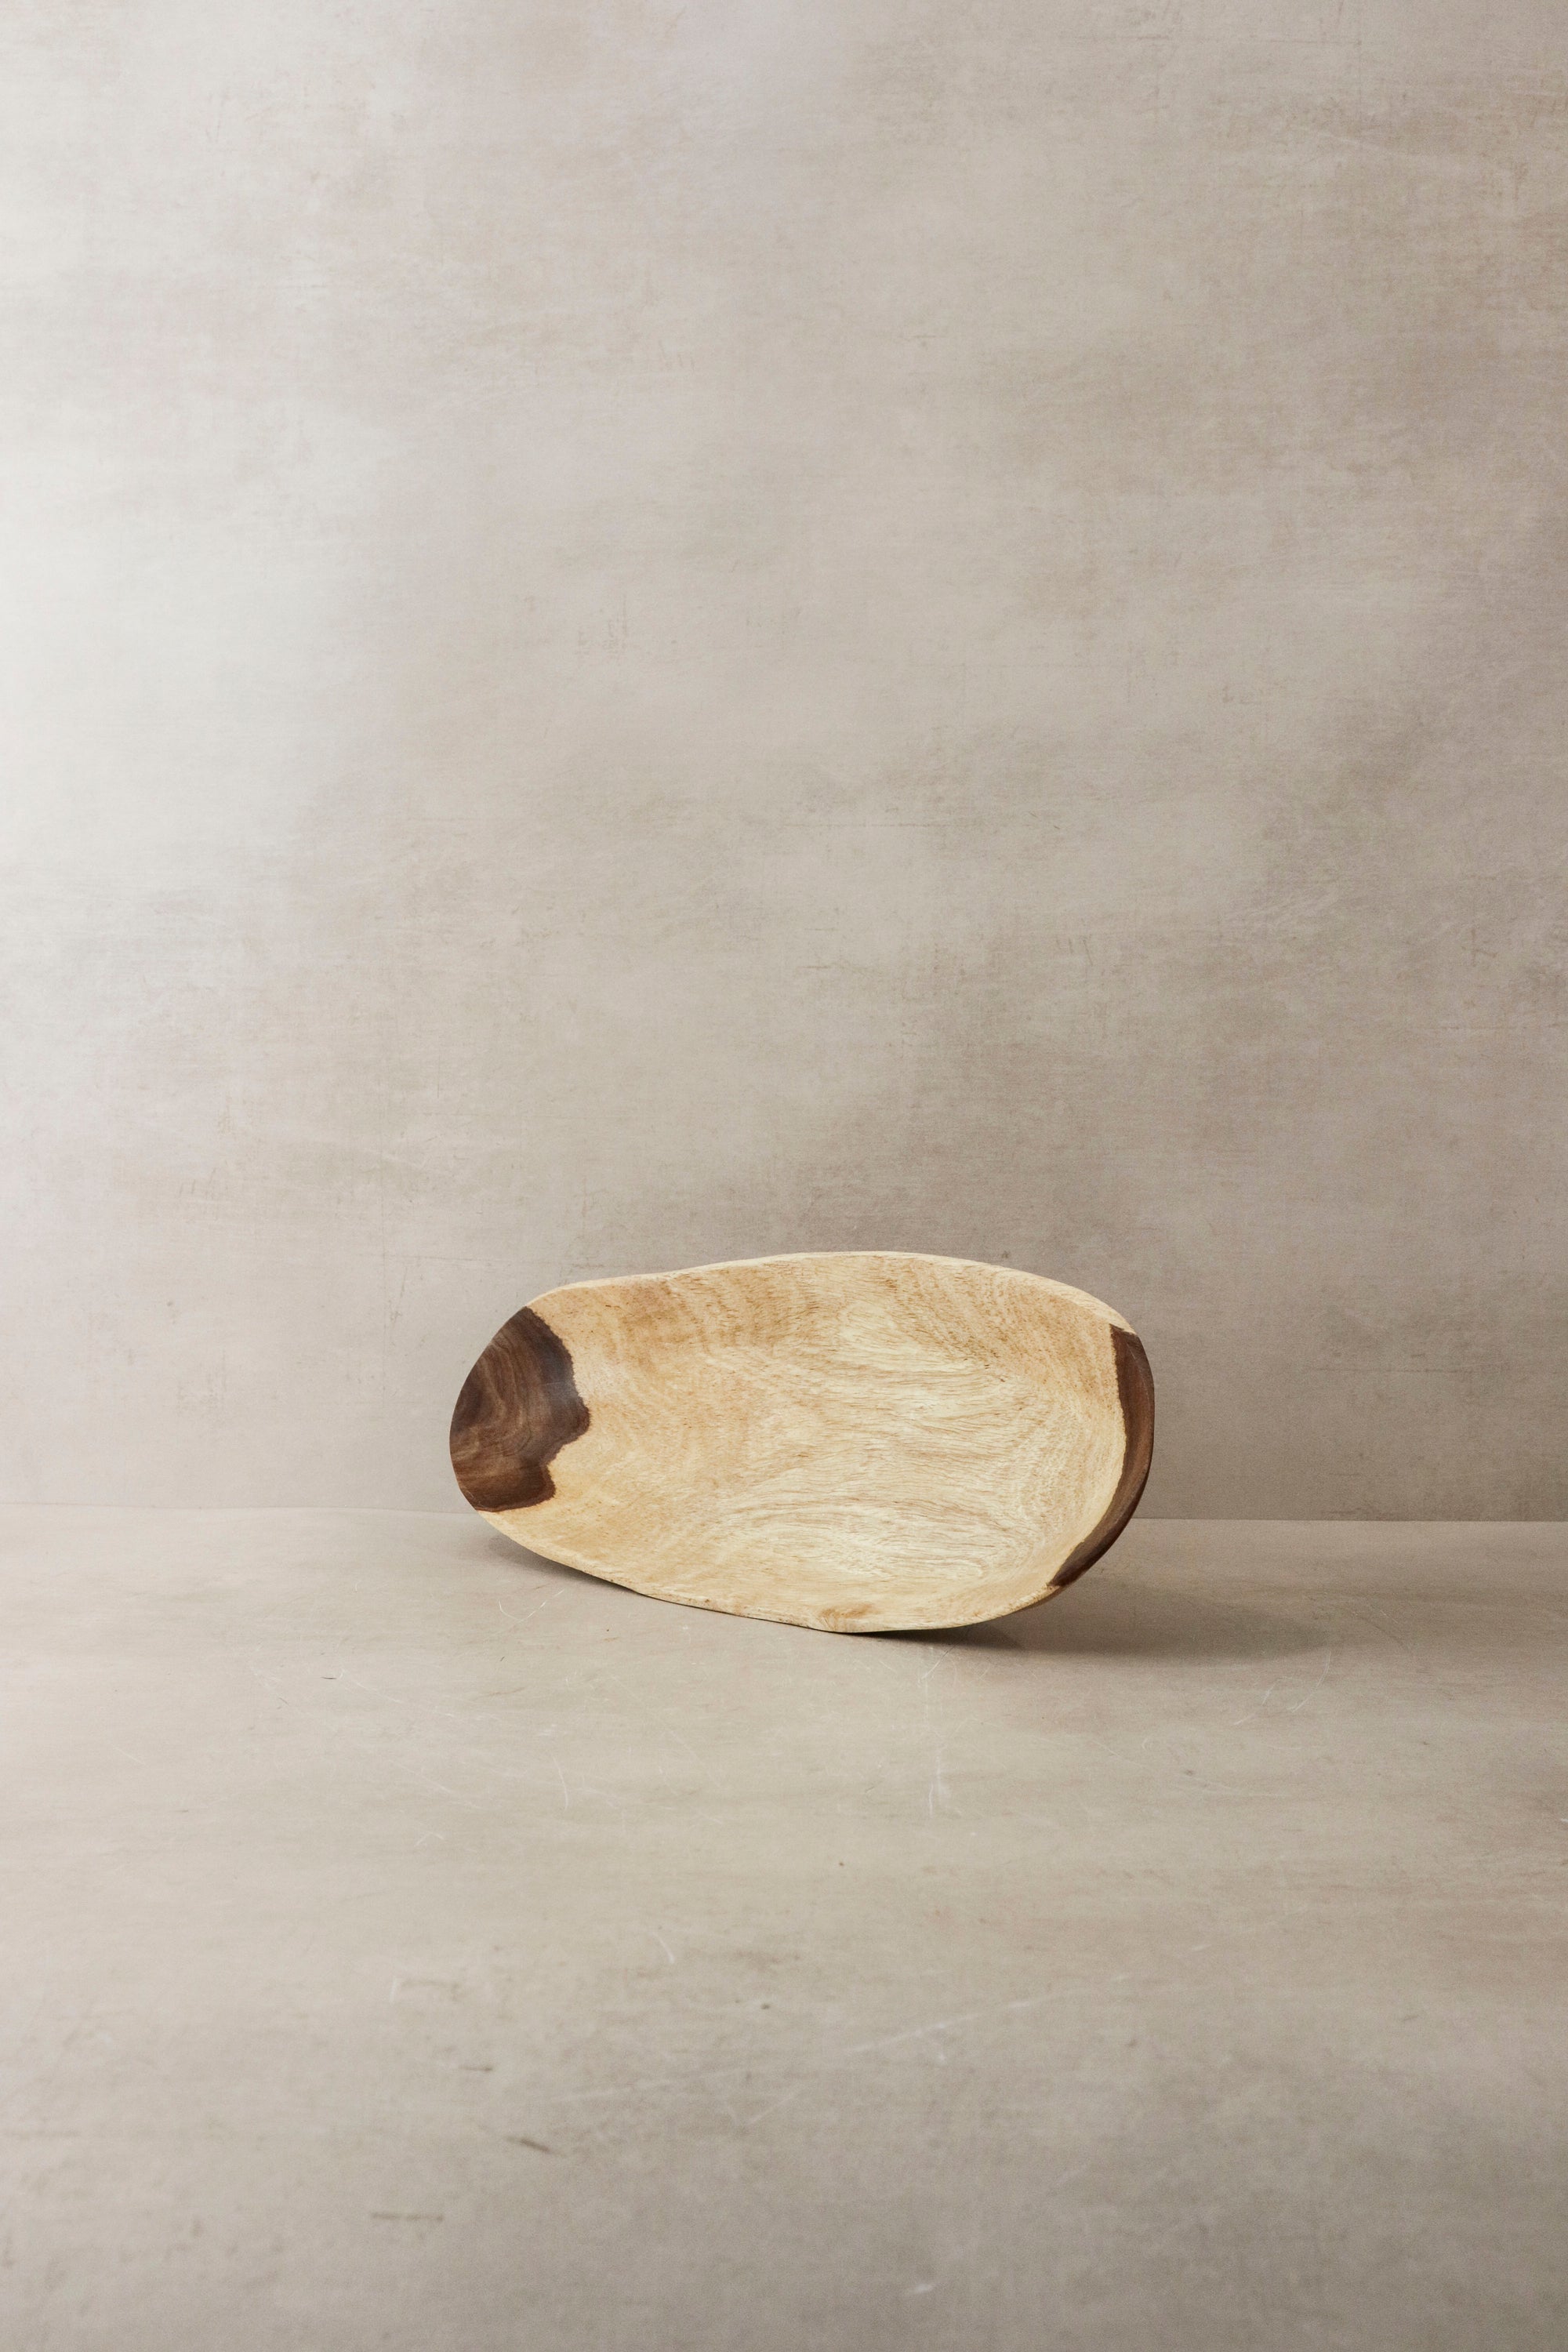 Handmade wooden bowl, Zimbabwe - 13.6